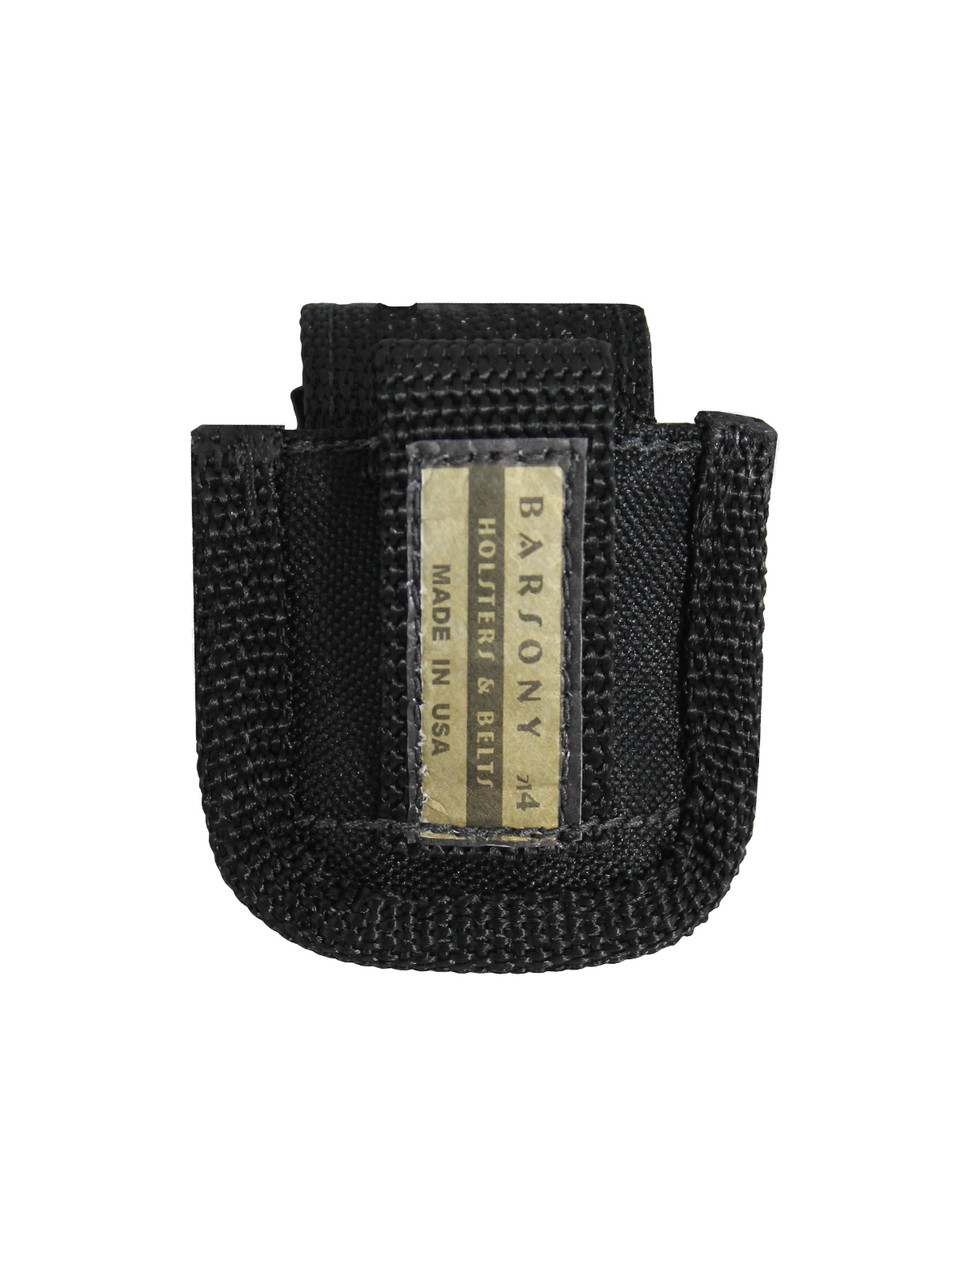 belt loop speed loader pouch